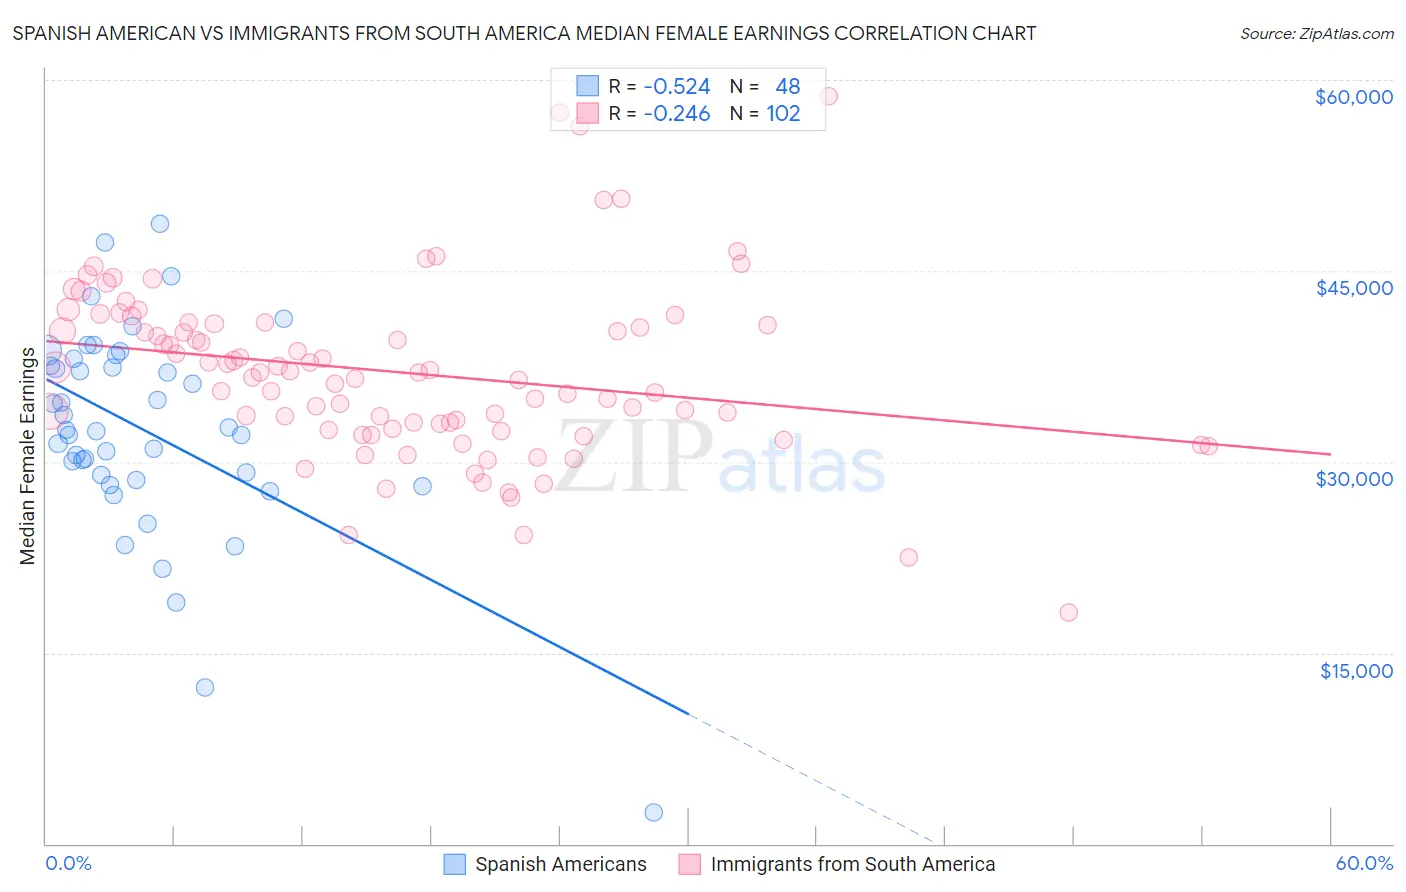 Spanish American vs Immigrants from South America Median Female Earnings